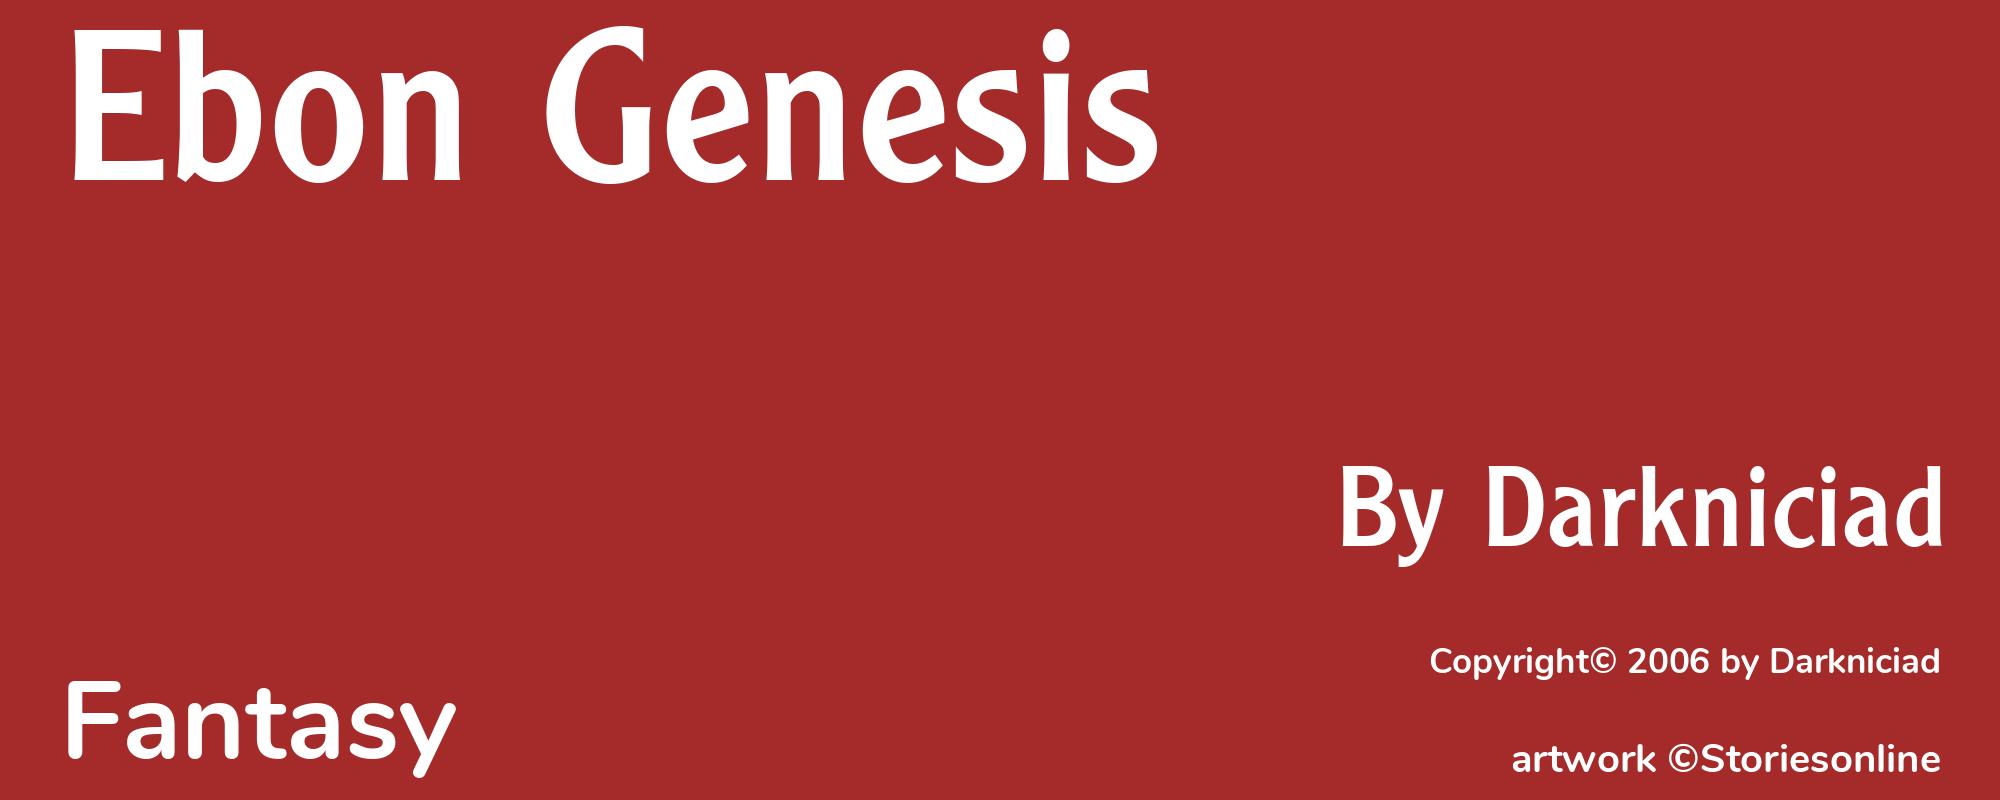 Ebon Genesis - Cover